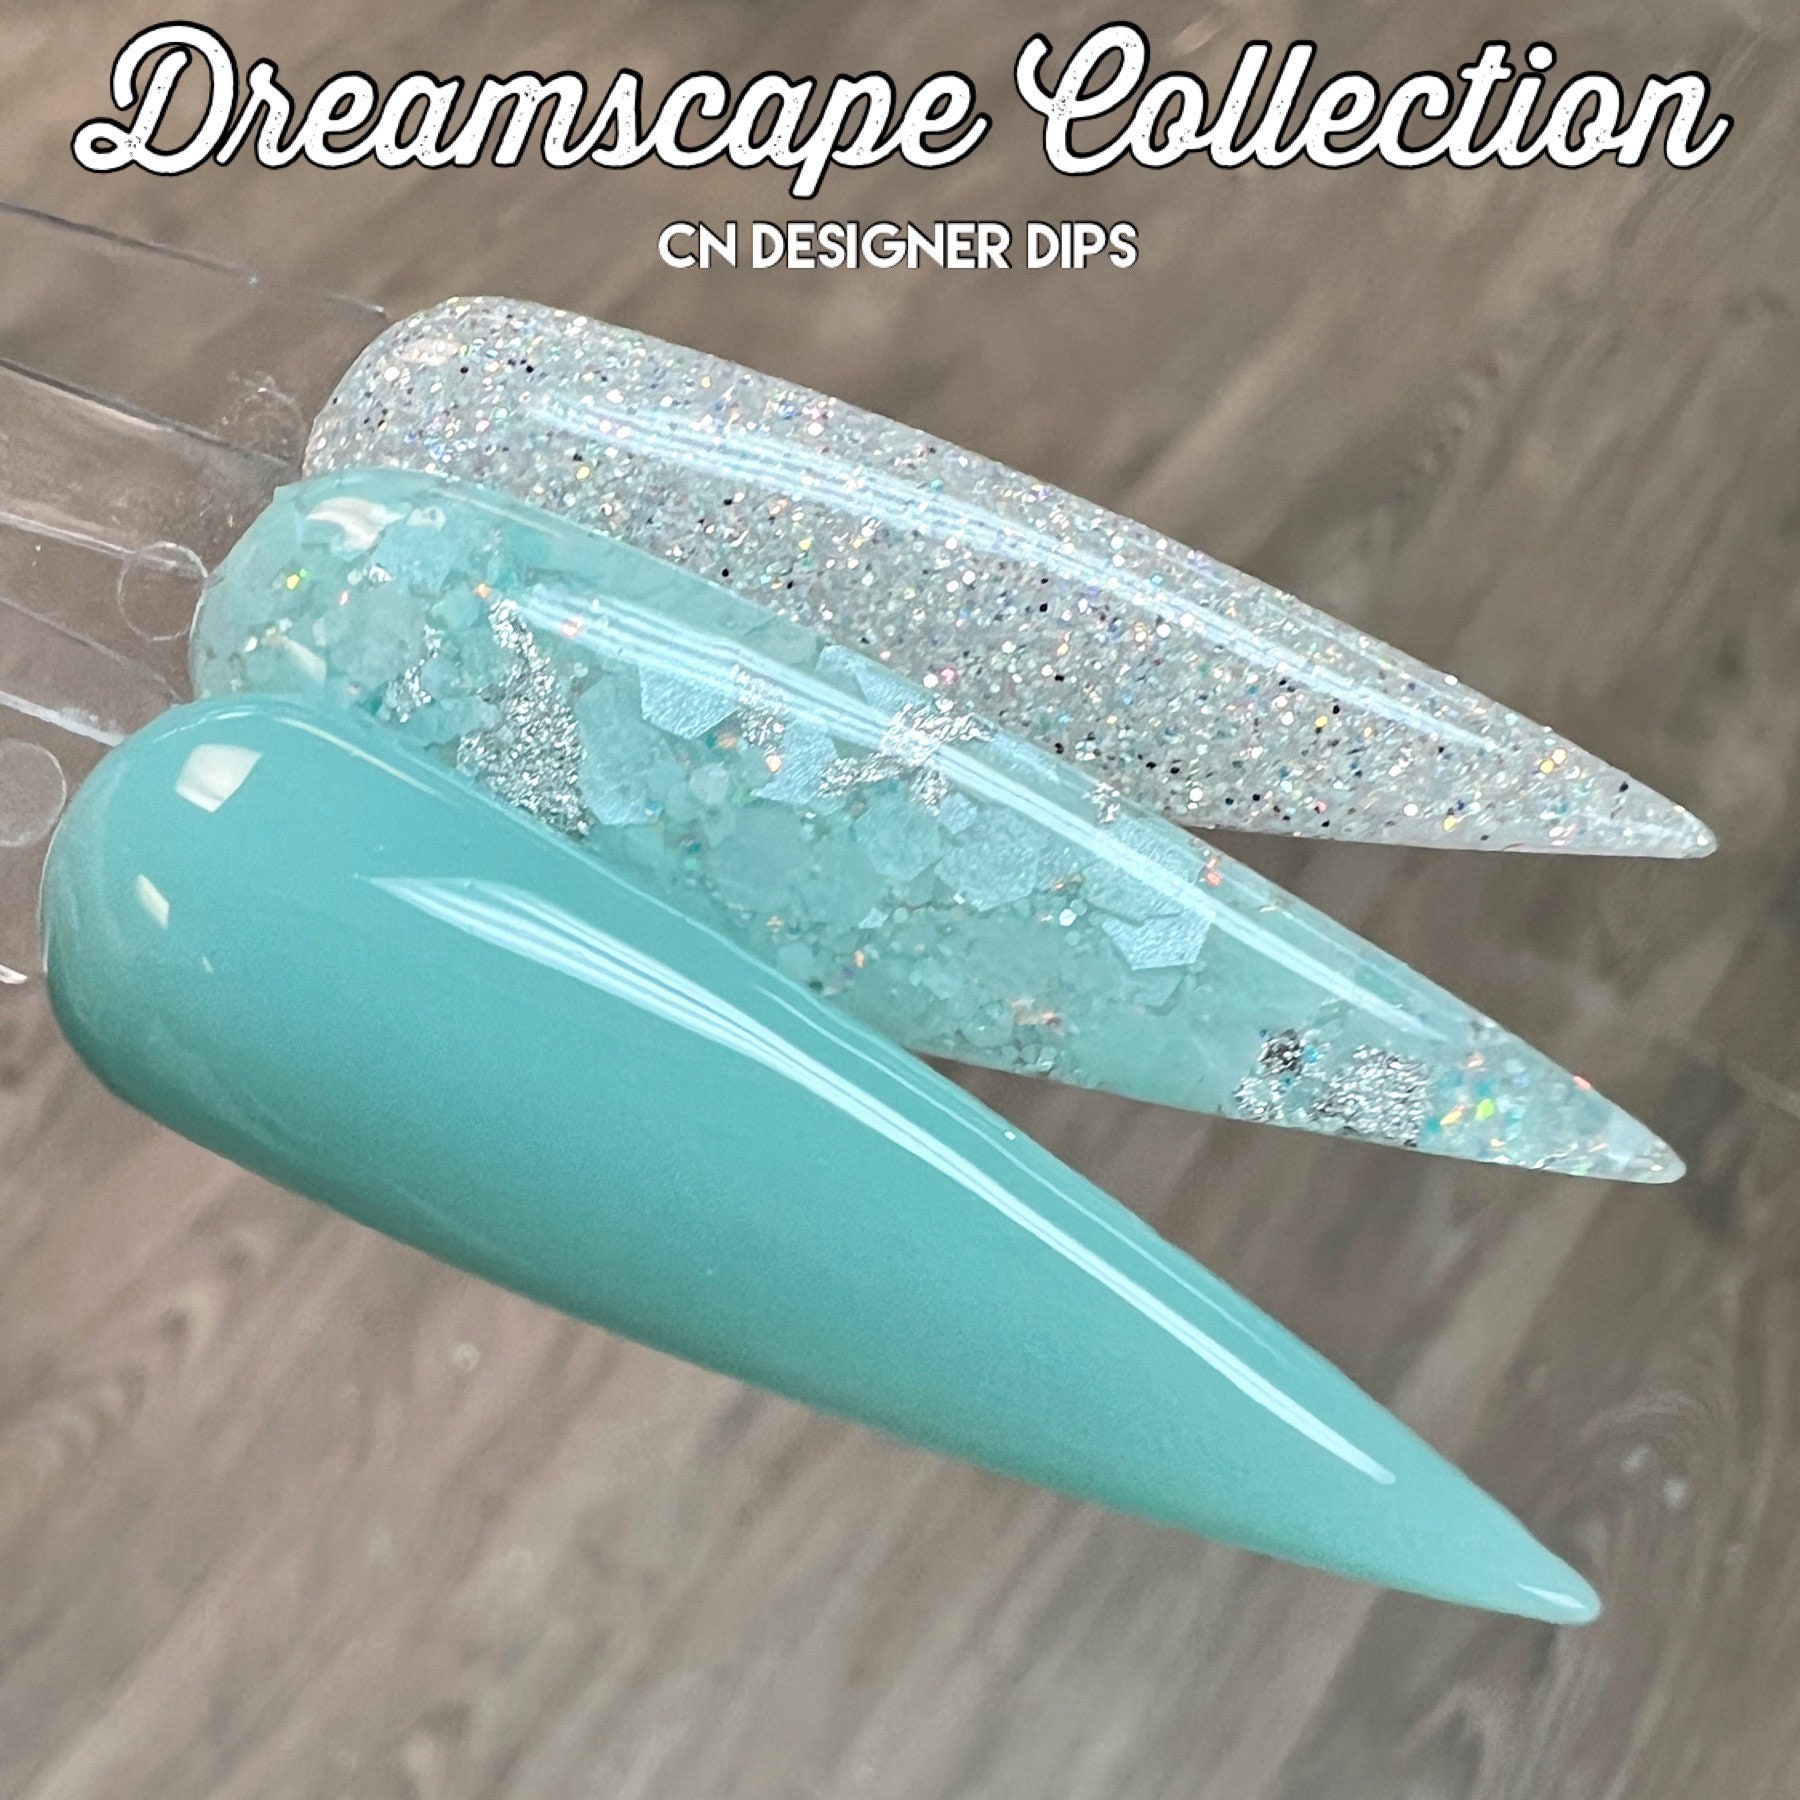 Dreamscape Collection - Dip-Pulver, Dip-Nagel-Pulver, Dip-Pulver Für Nägel, Acrylpulver, Nagel-Dip, Nagel, Acryl, Acrylfarben von Etsy - CNDesignerDips